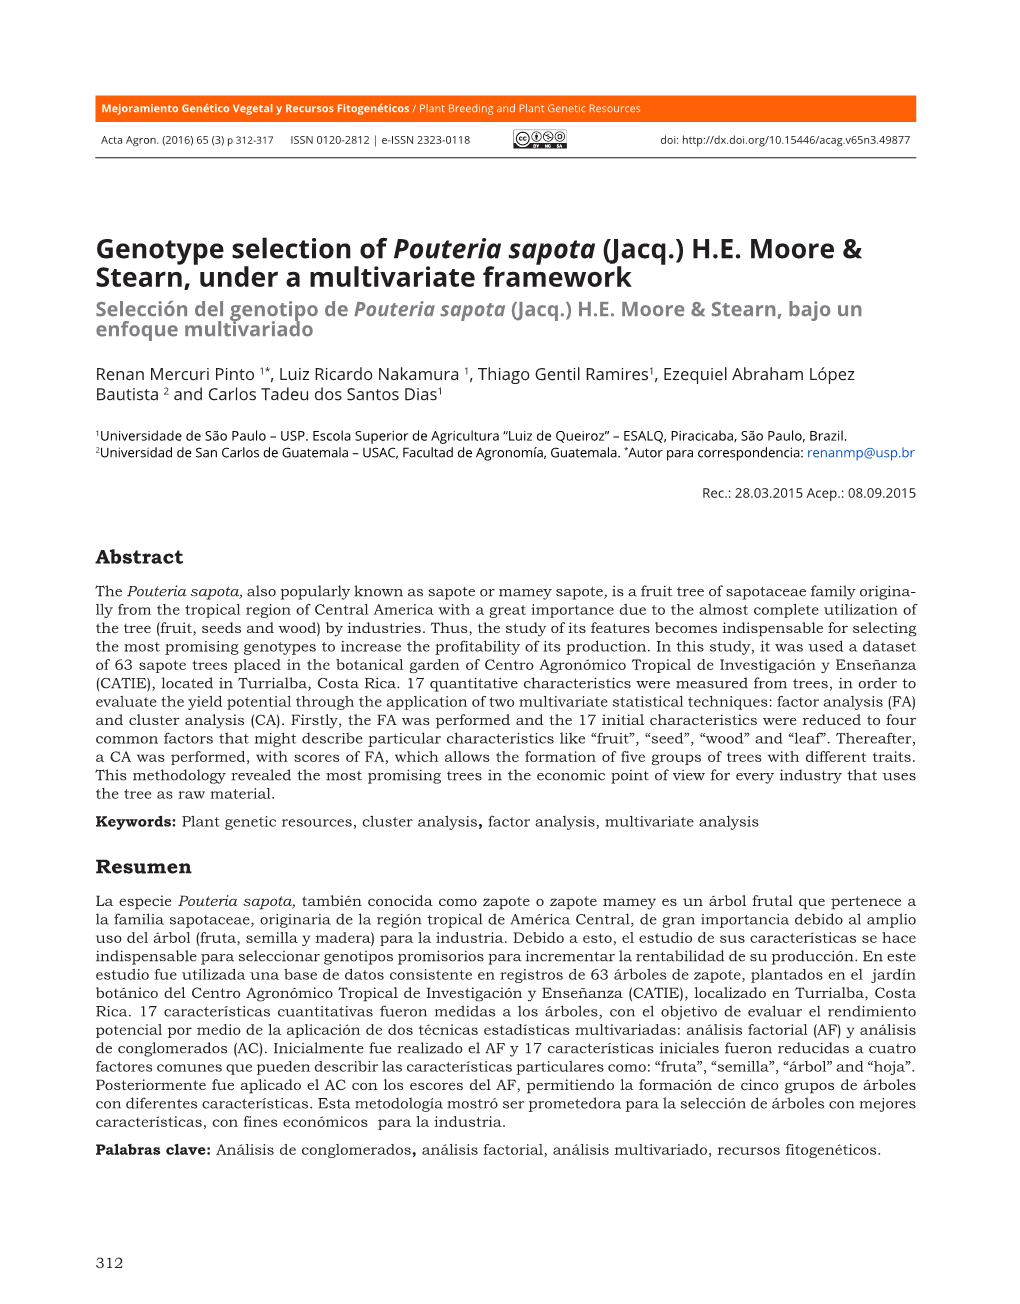 Genotype Selection of Pouteria Sapota (Jacq.) H.E. Moore & Stearn, Under